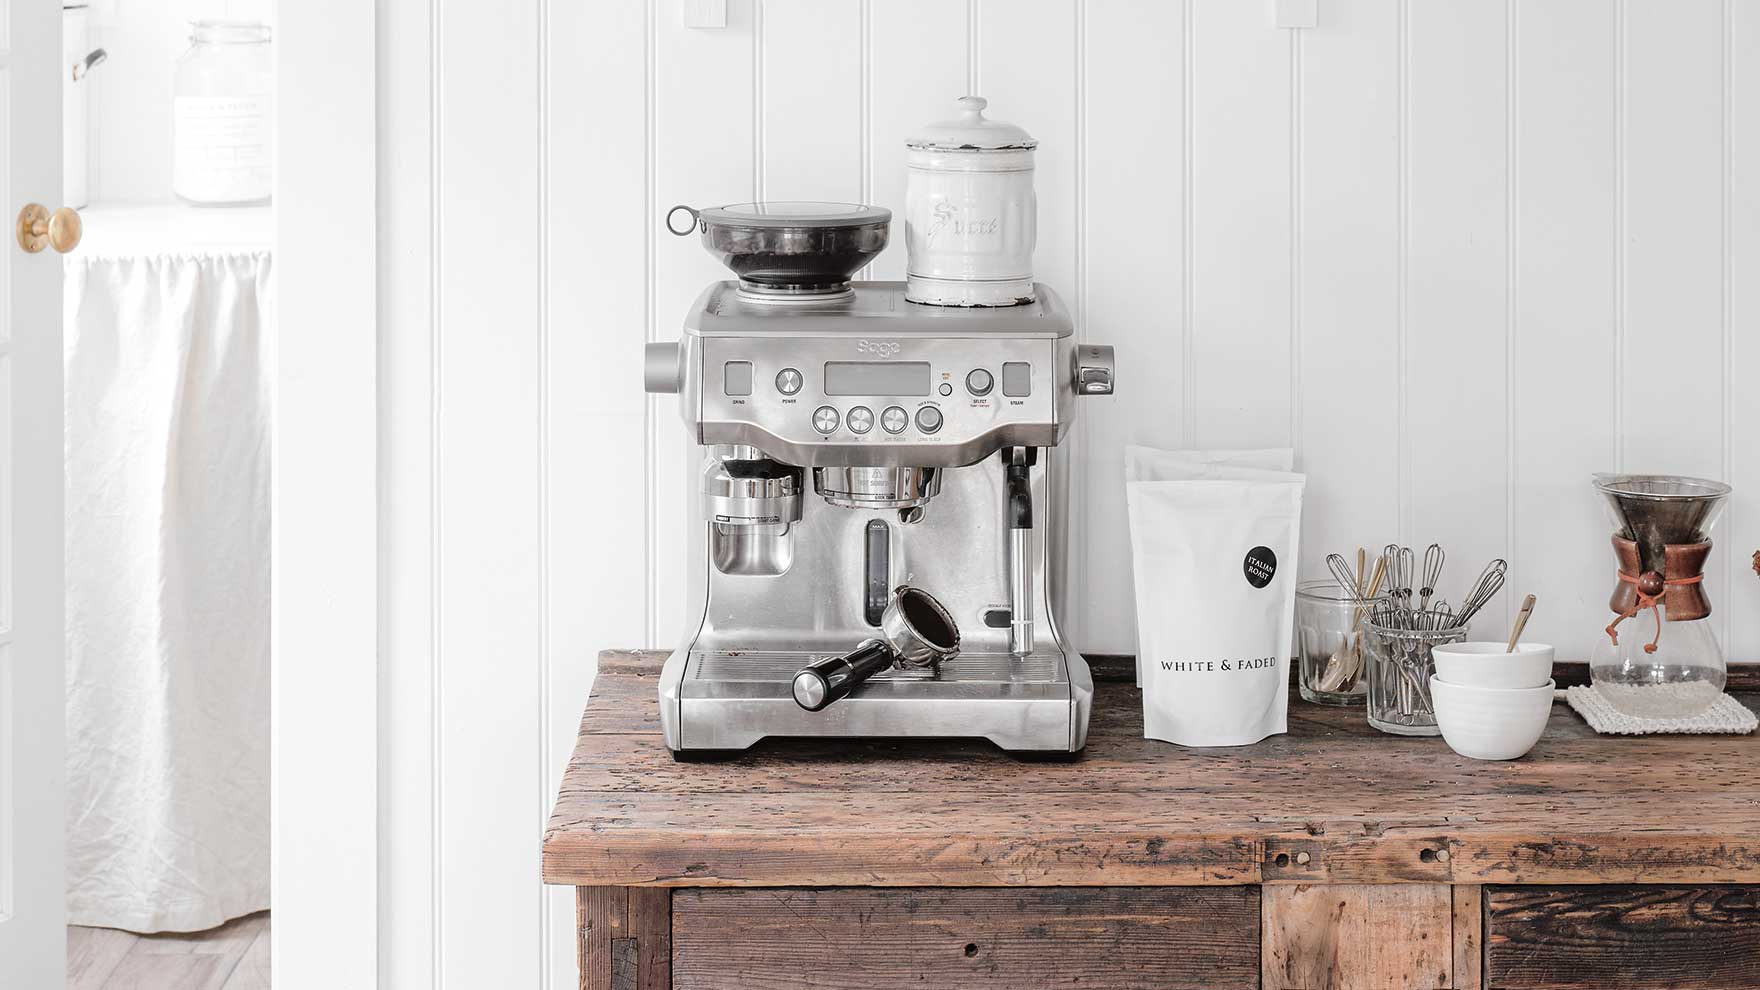 SMEG COFFEE MAKER - Classically Modern Life, Style & Home